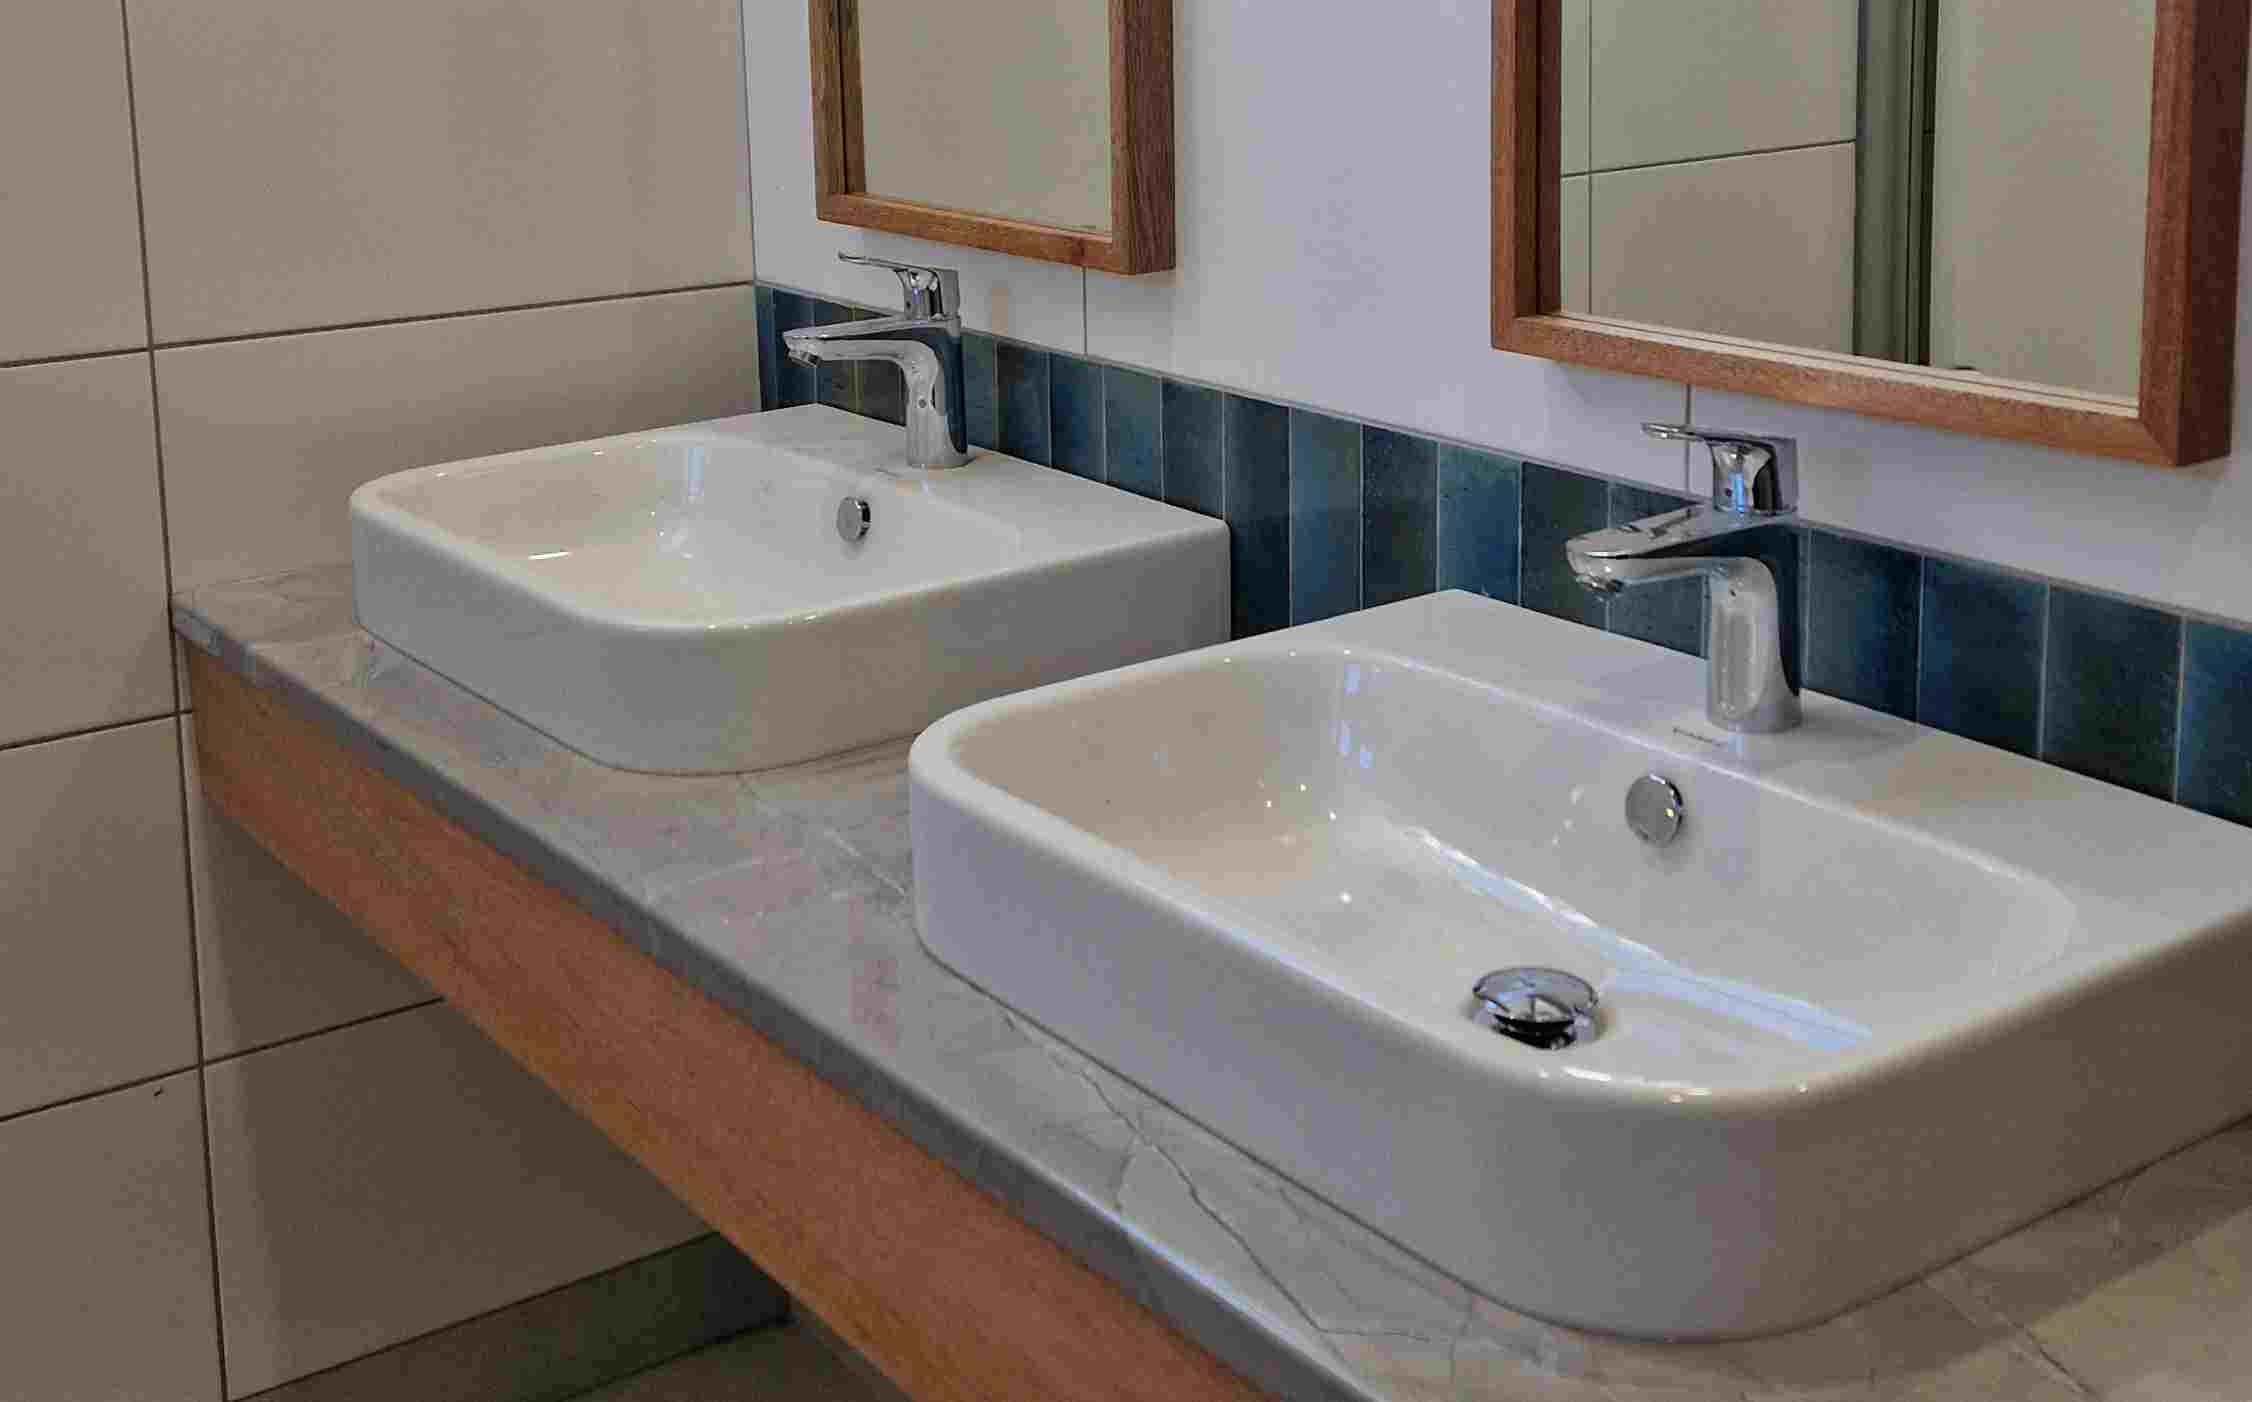 New bathrooms at DHPS Boarding School